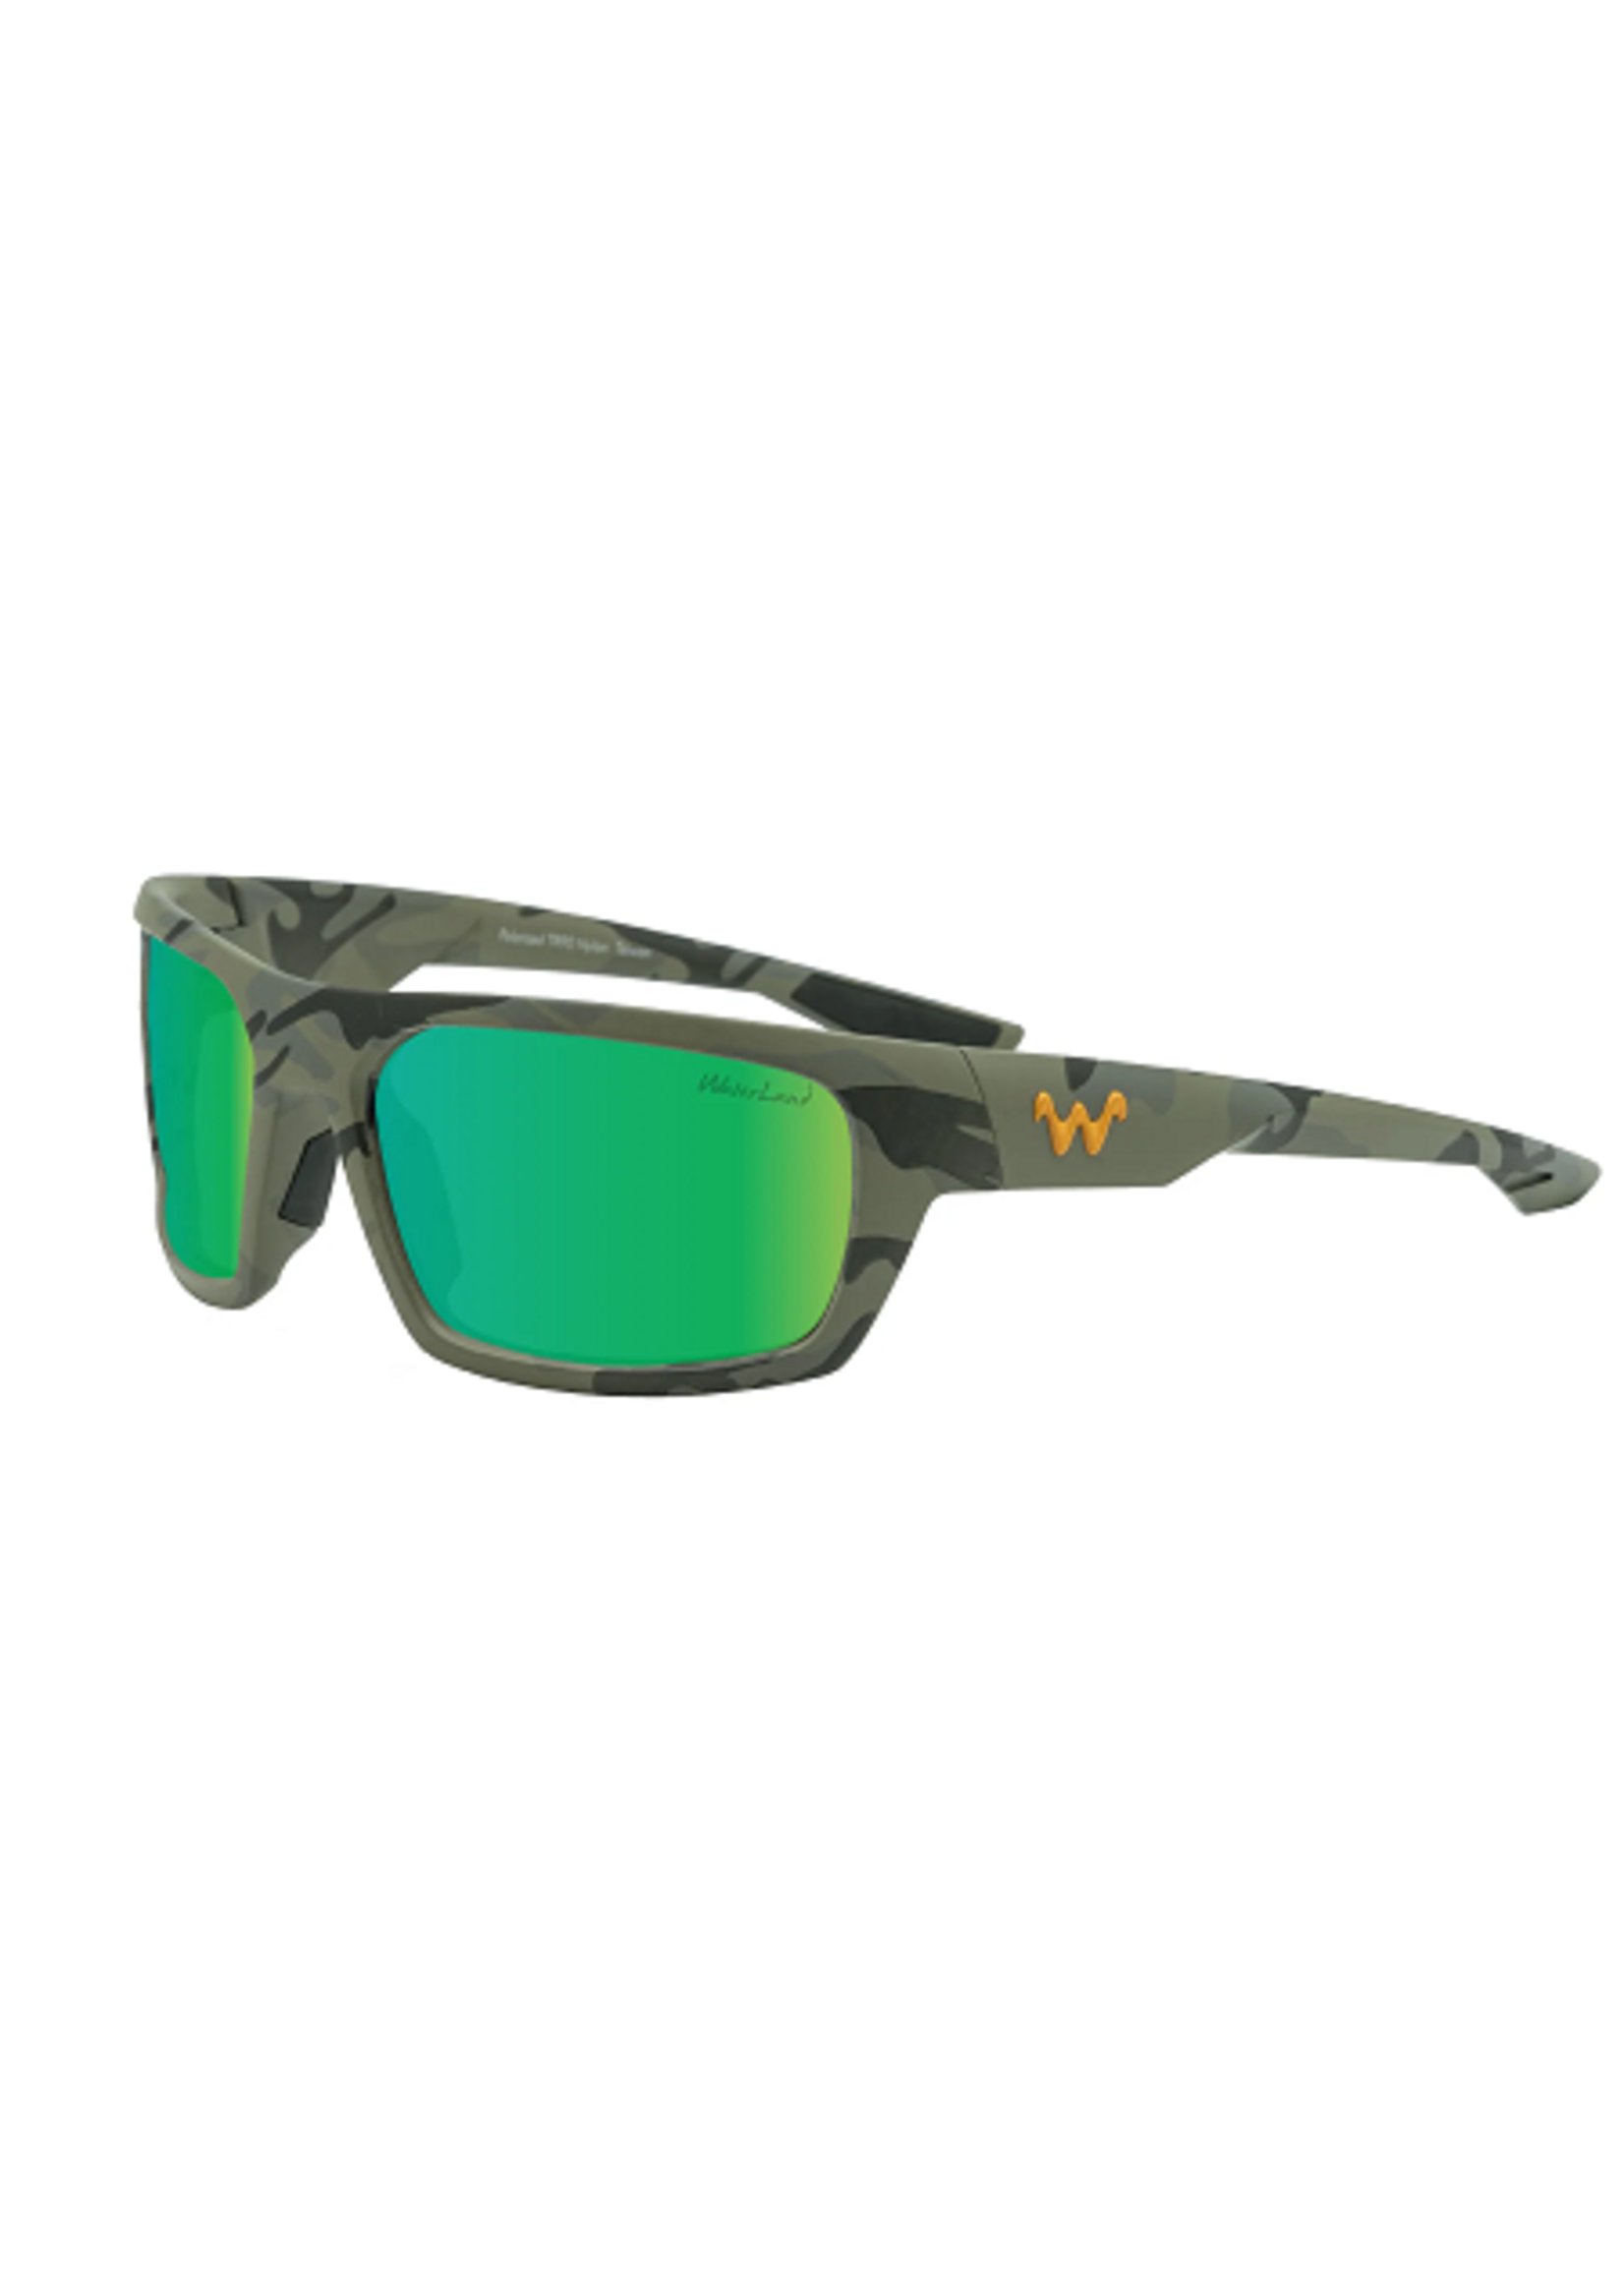 WaterLand Co, LLC. WaterLand Miliken Series Polarized Sunglasses